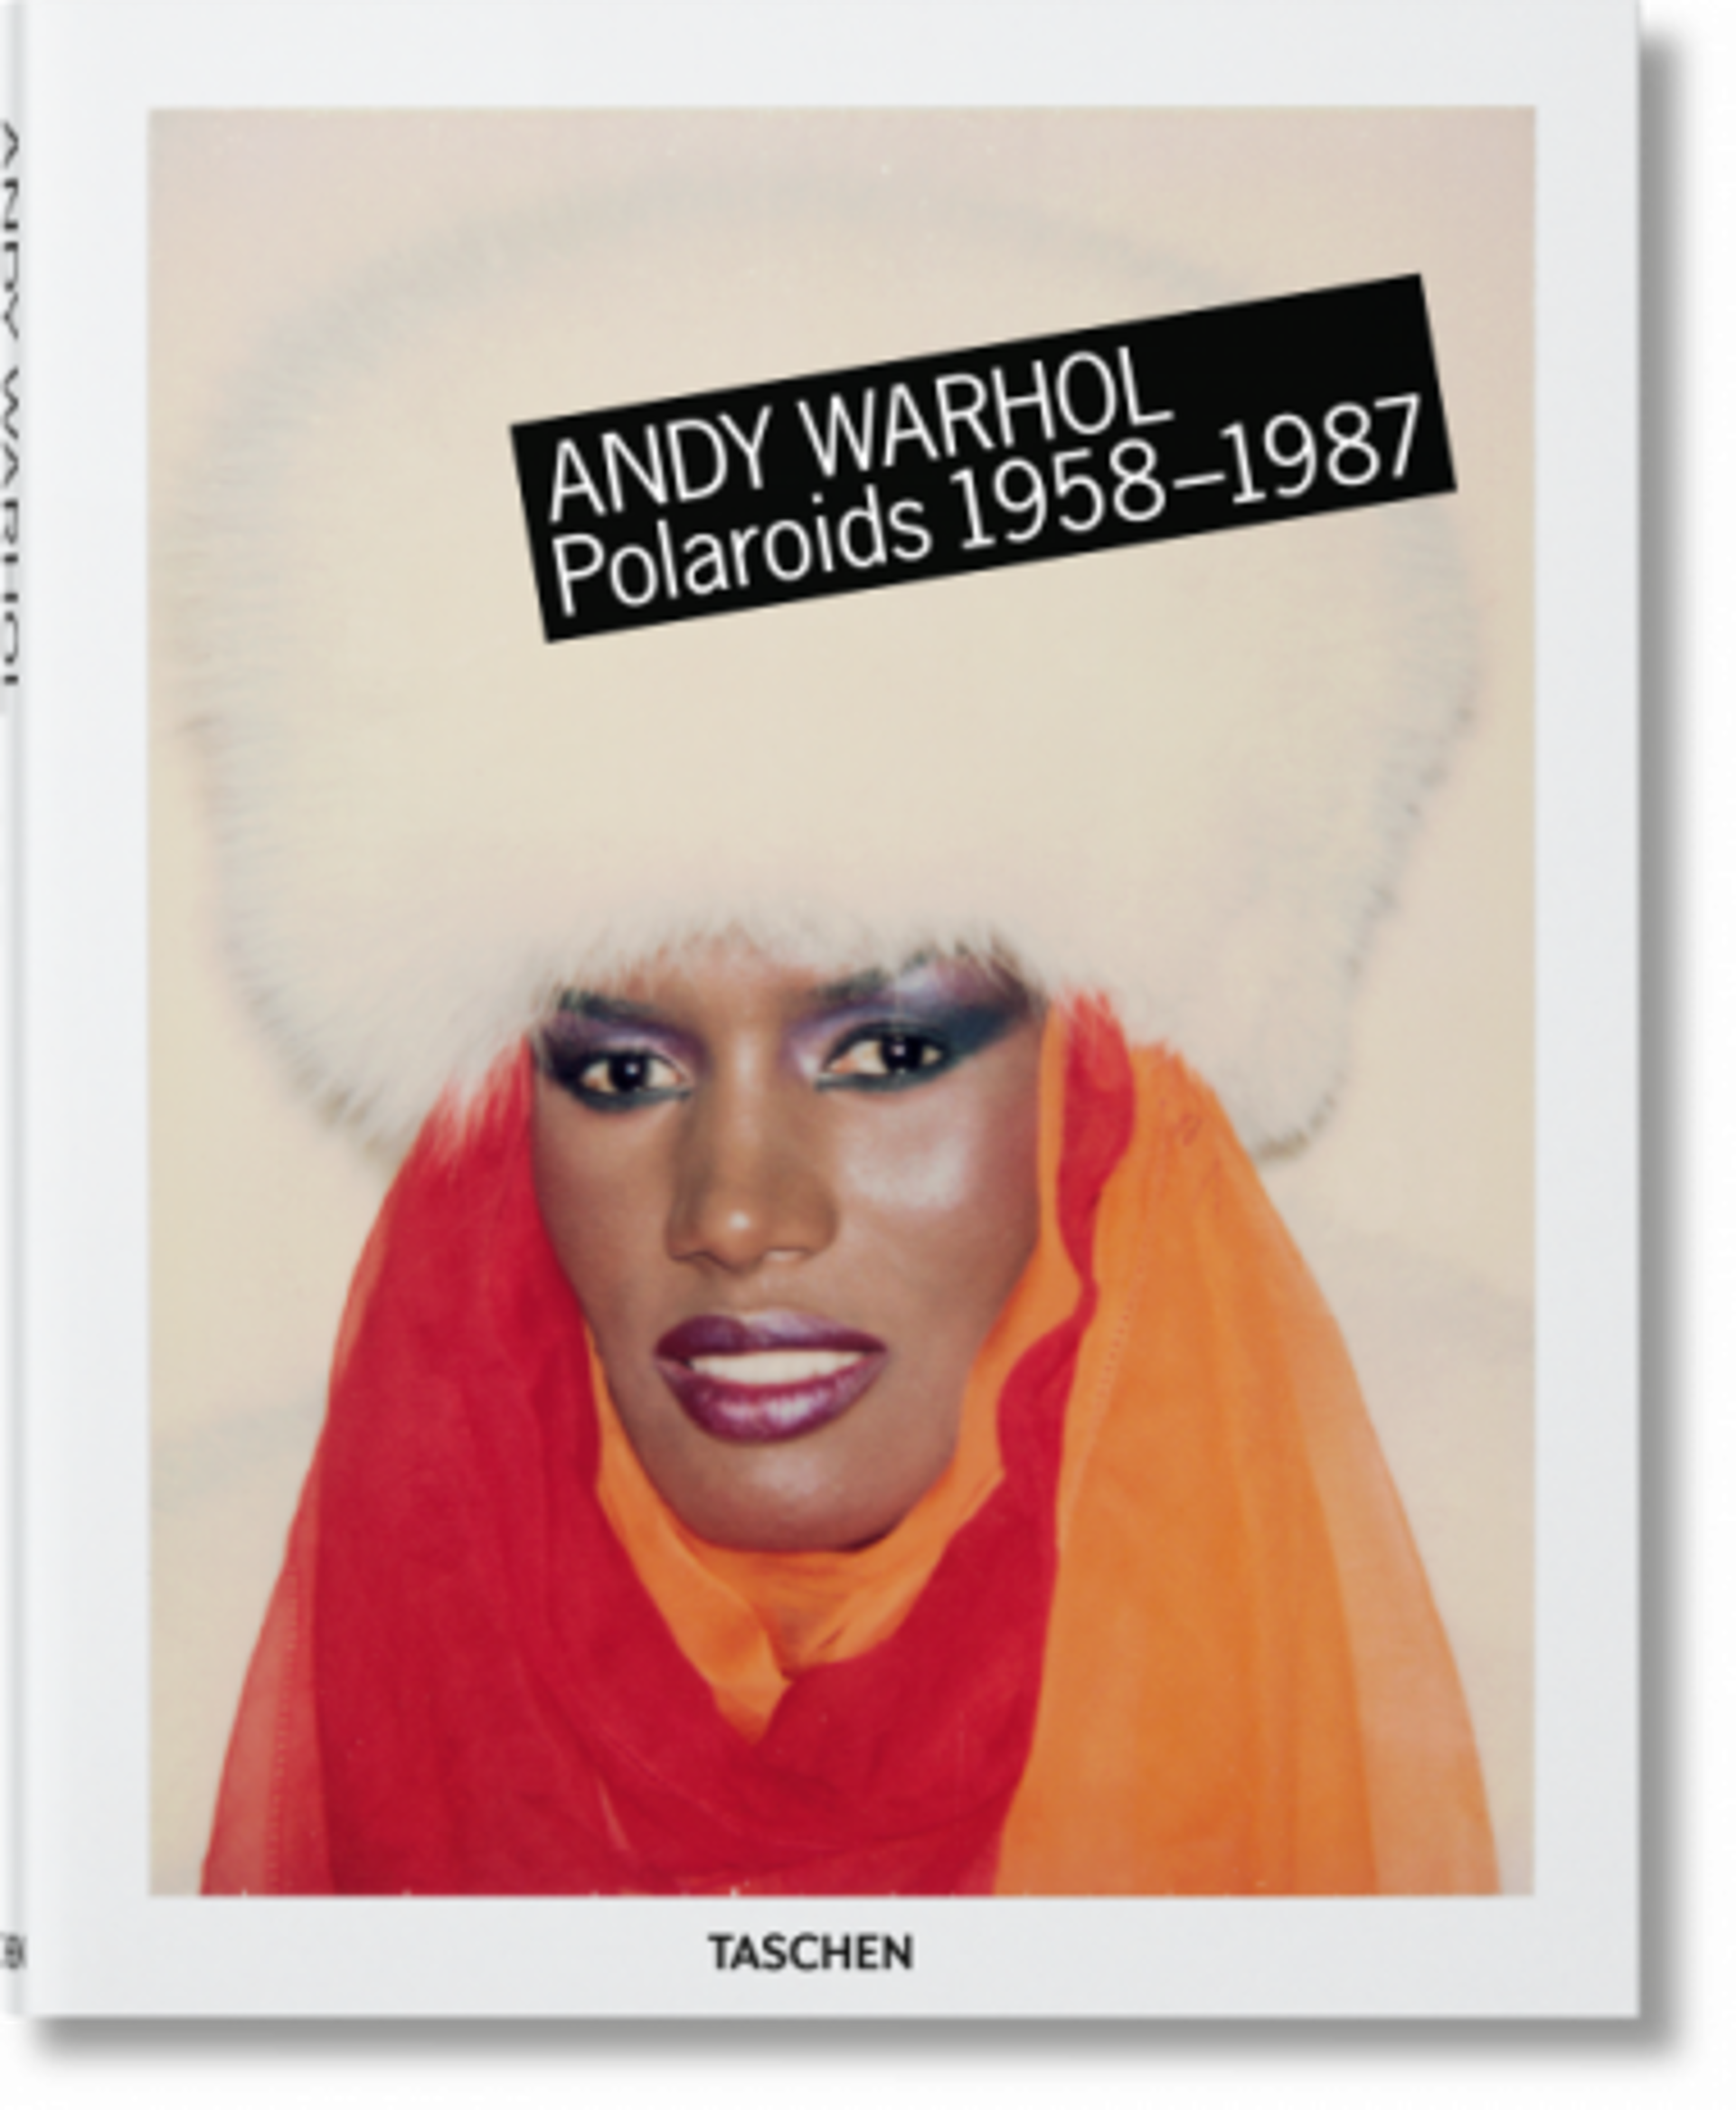 Andy Warhol Polaroids 1958-1987 by Andy Warhol